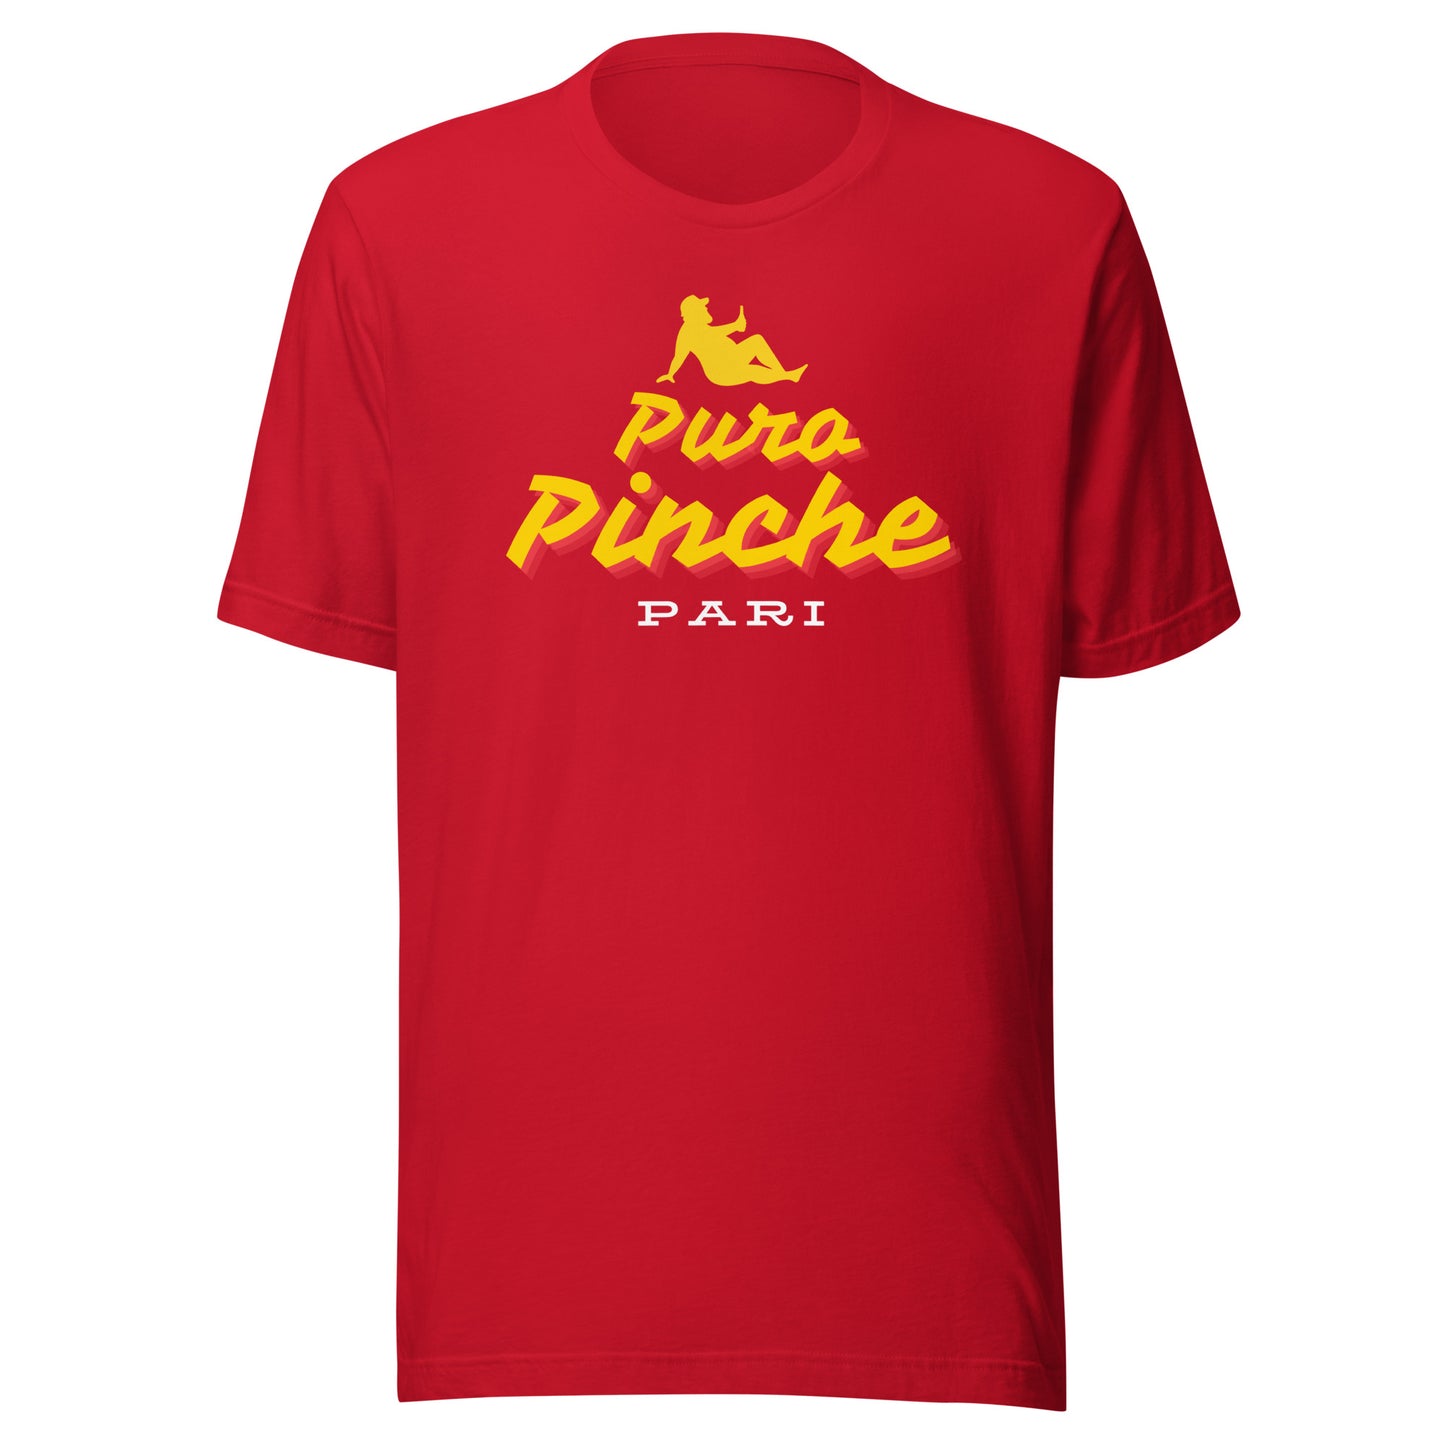 Puro Pinche Pari - Unisex T-shirt